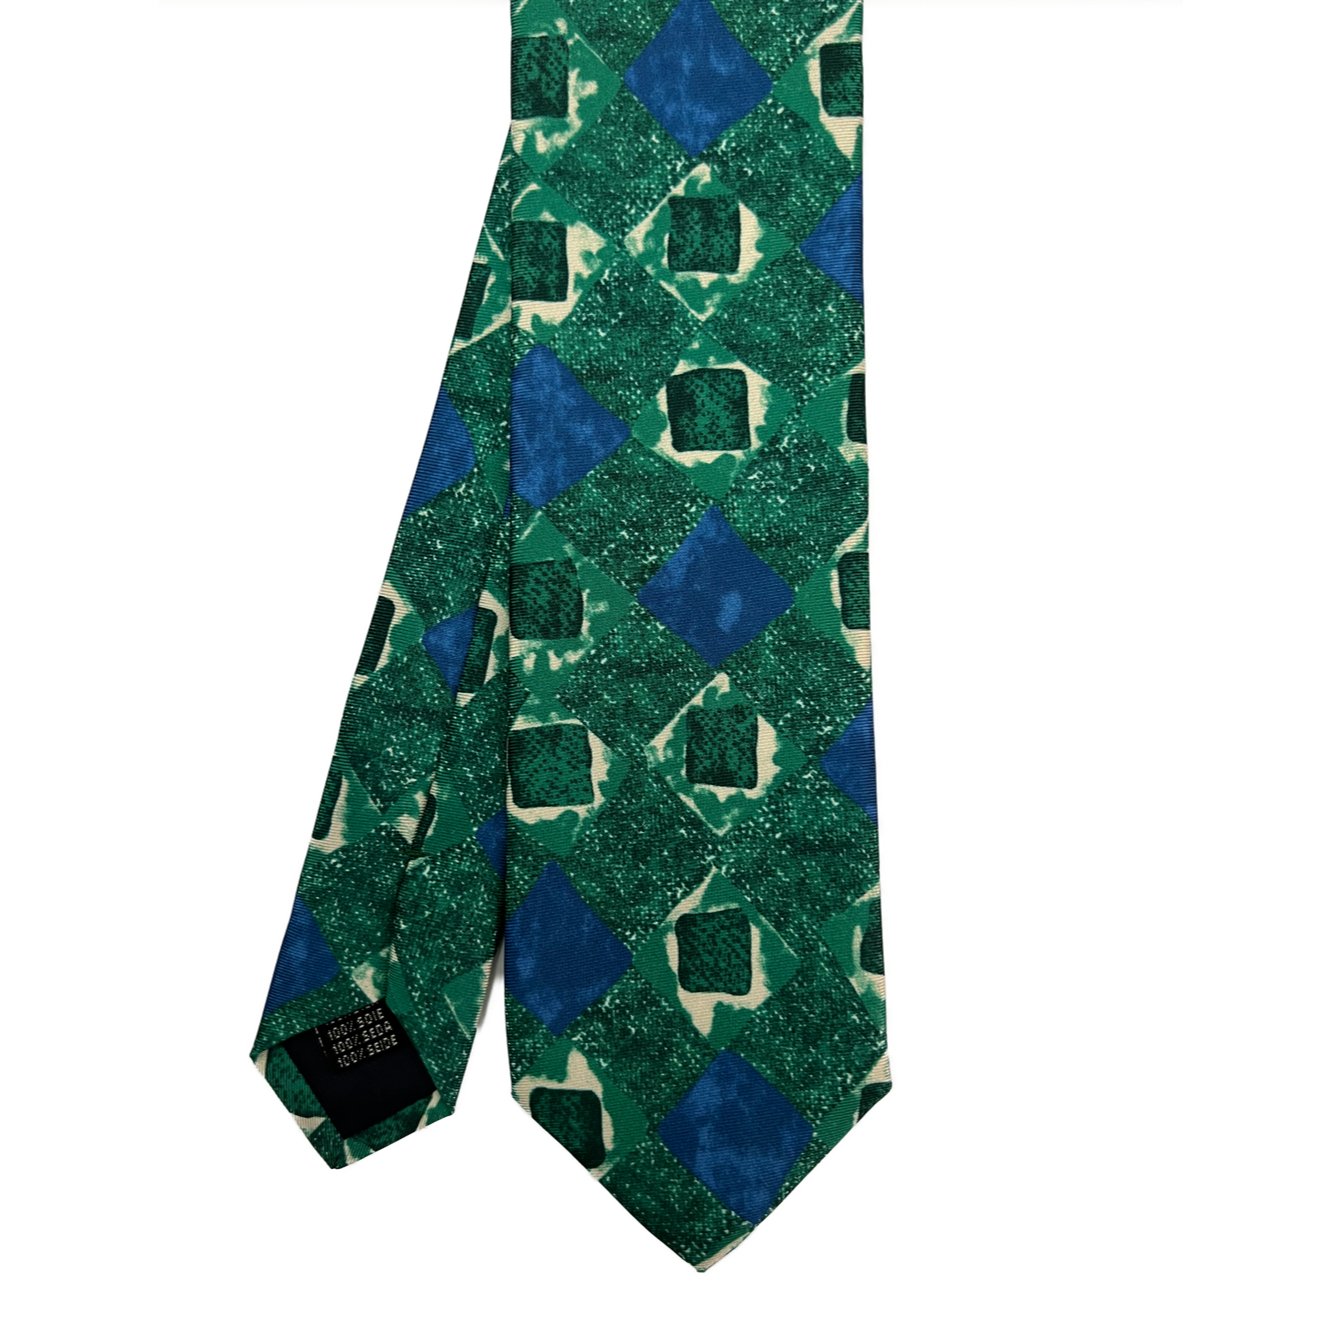 Cravatta seta fantasia astratta smeraldo Monsieur - MONSIEUR